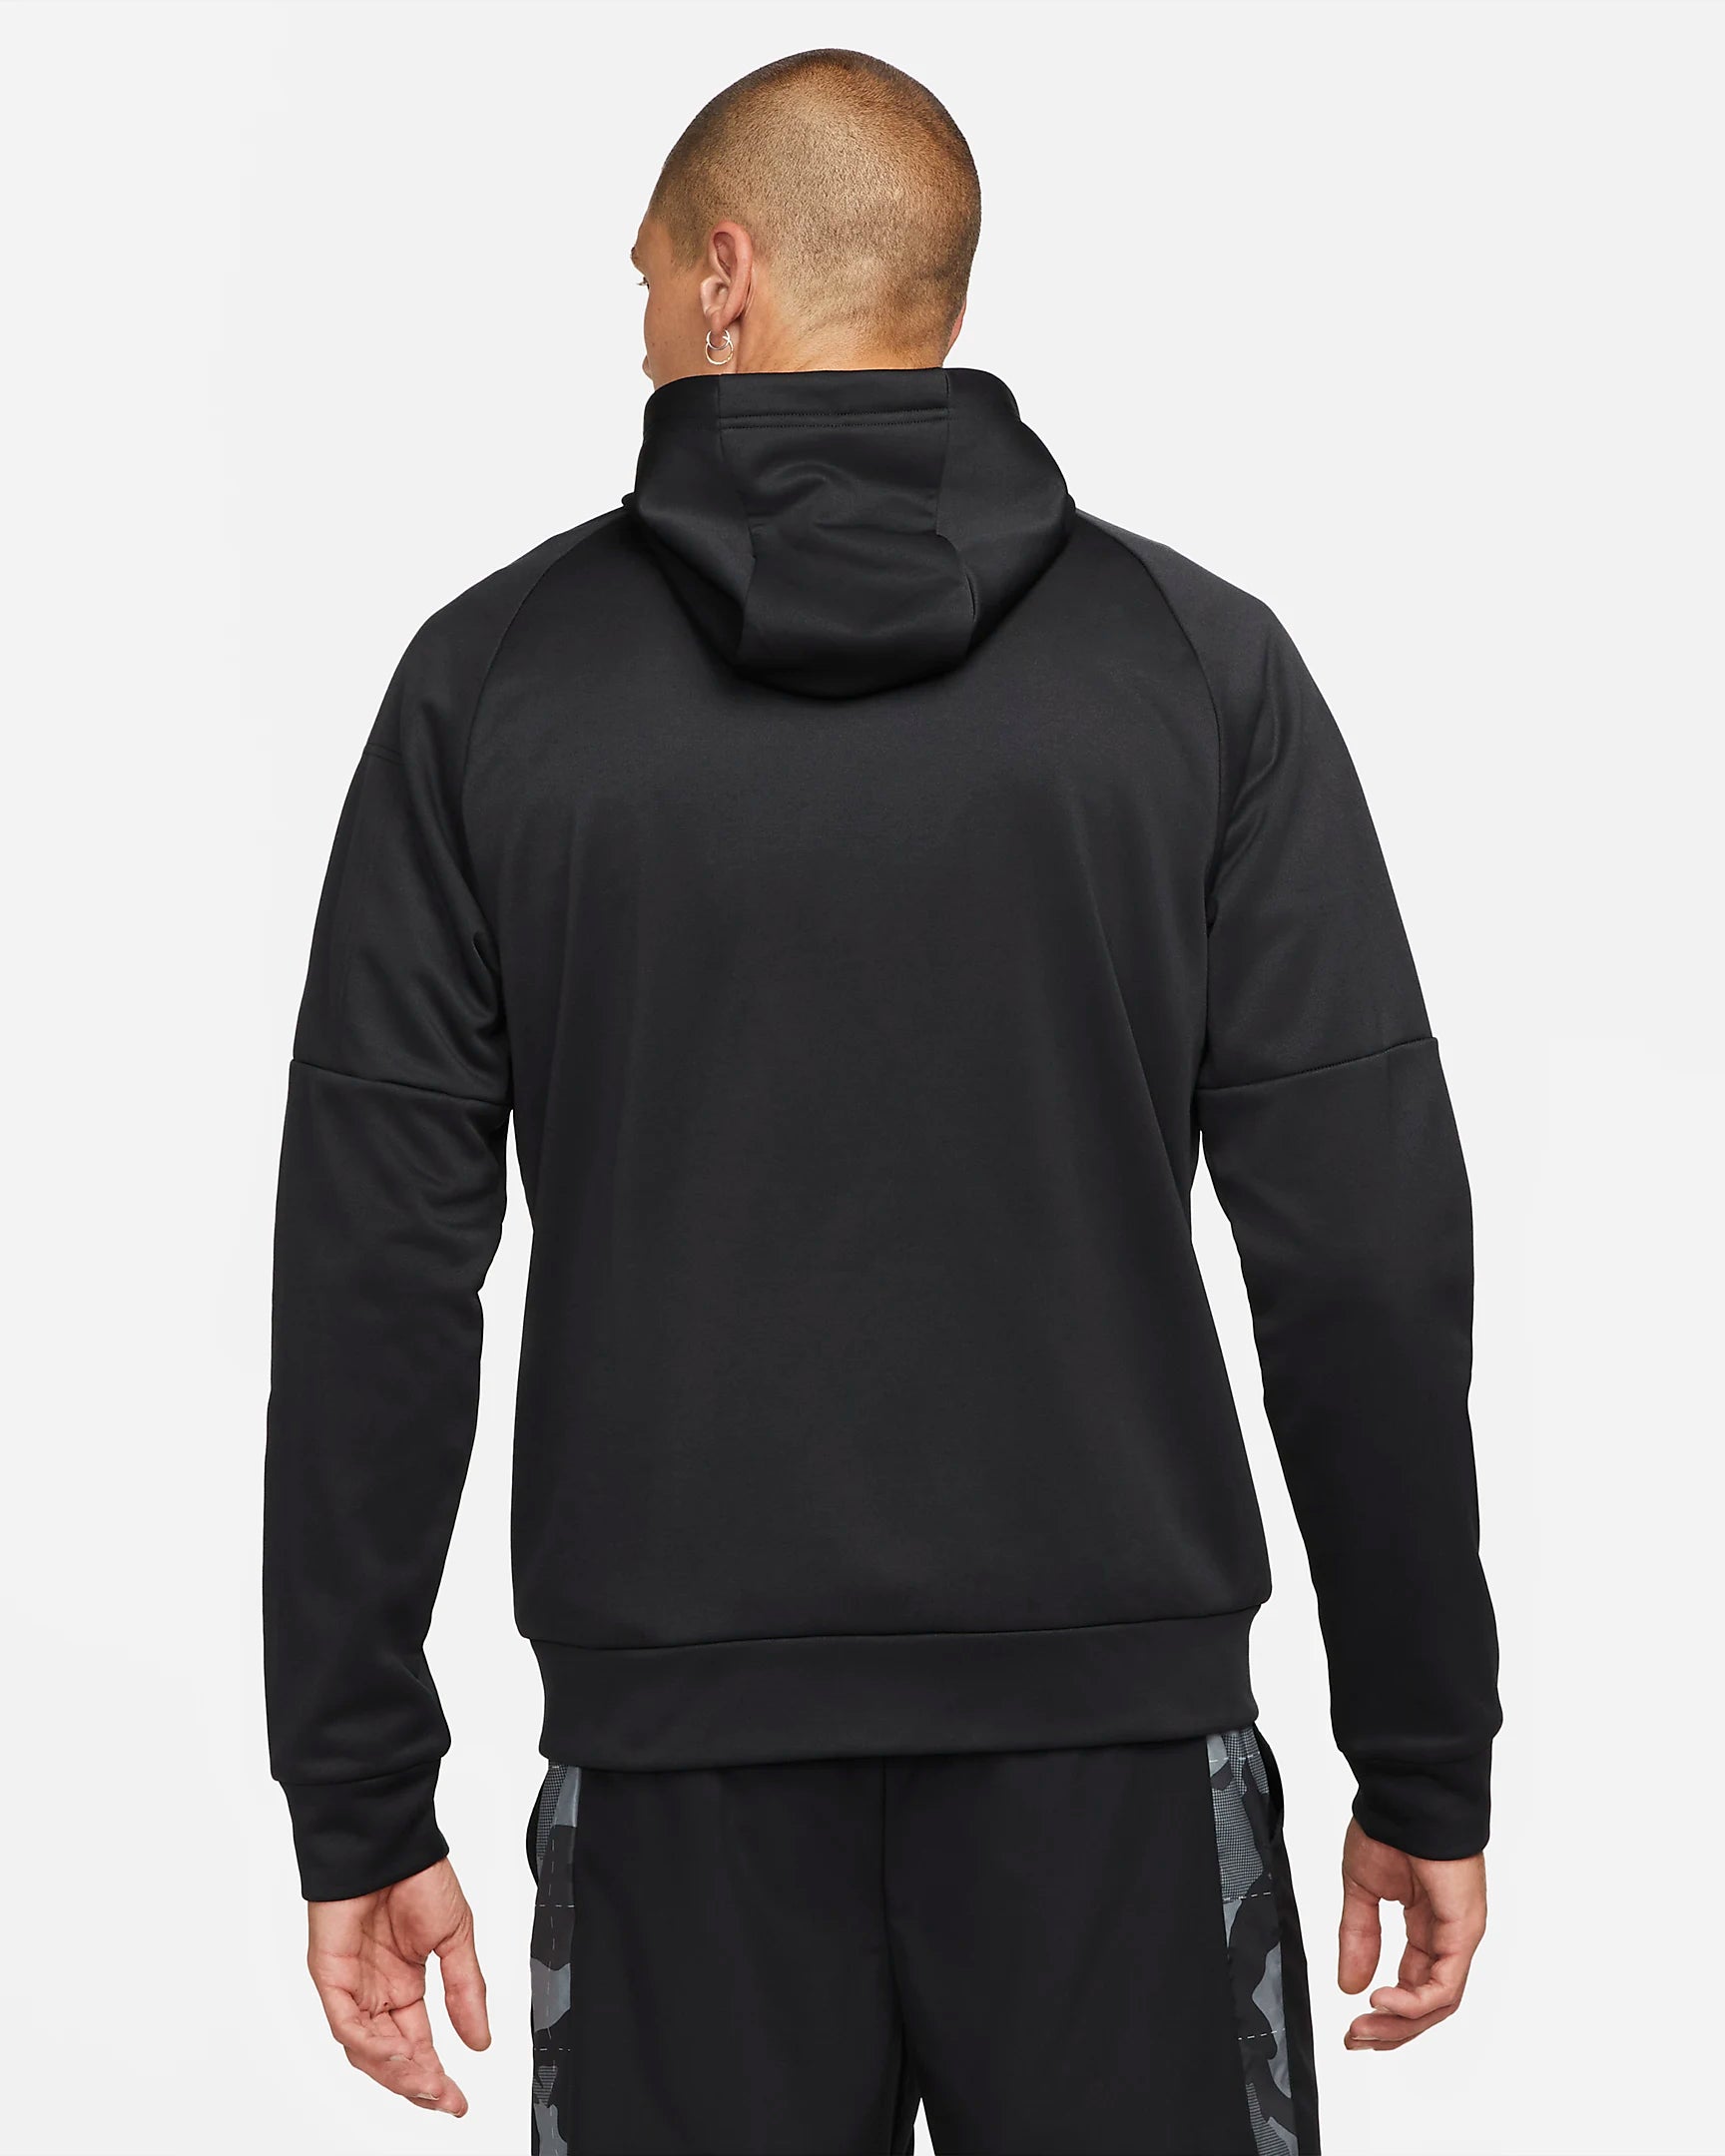 Nike Therma Jacket - Fit - Black